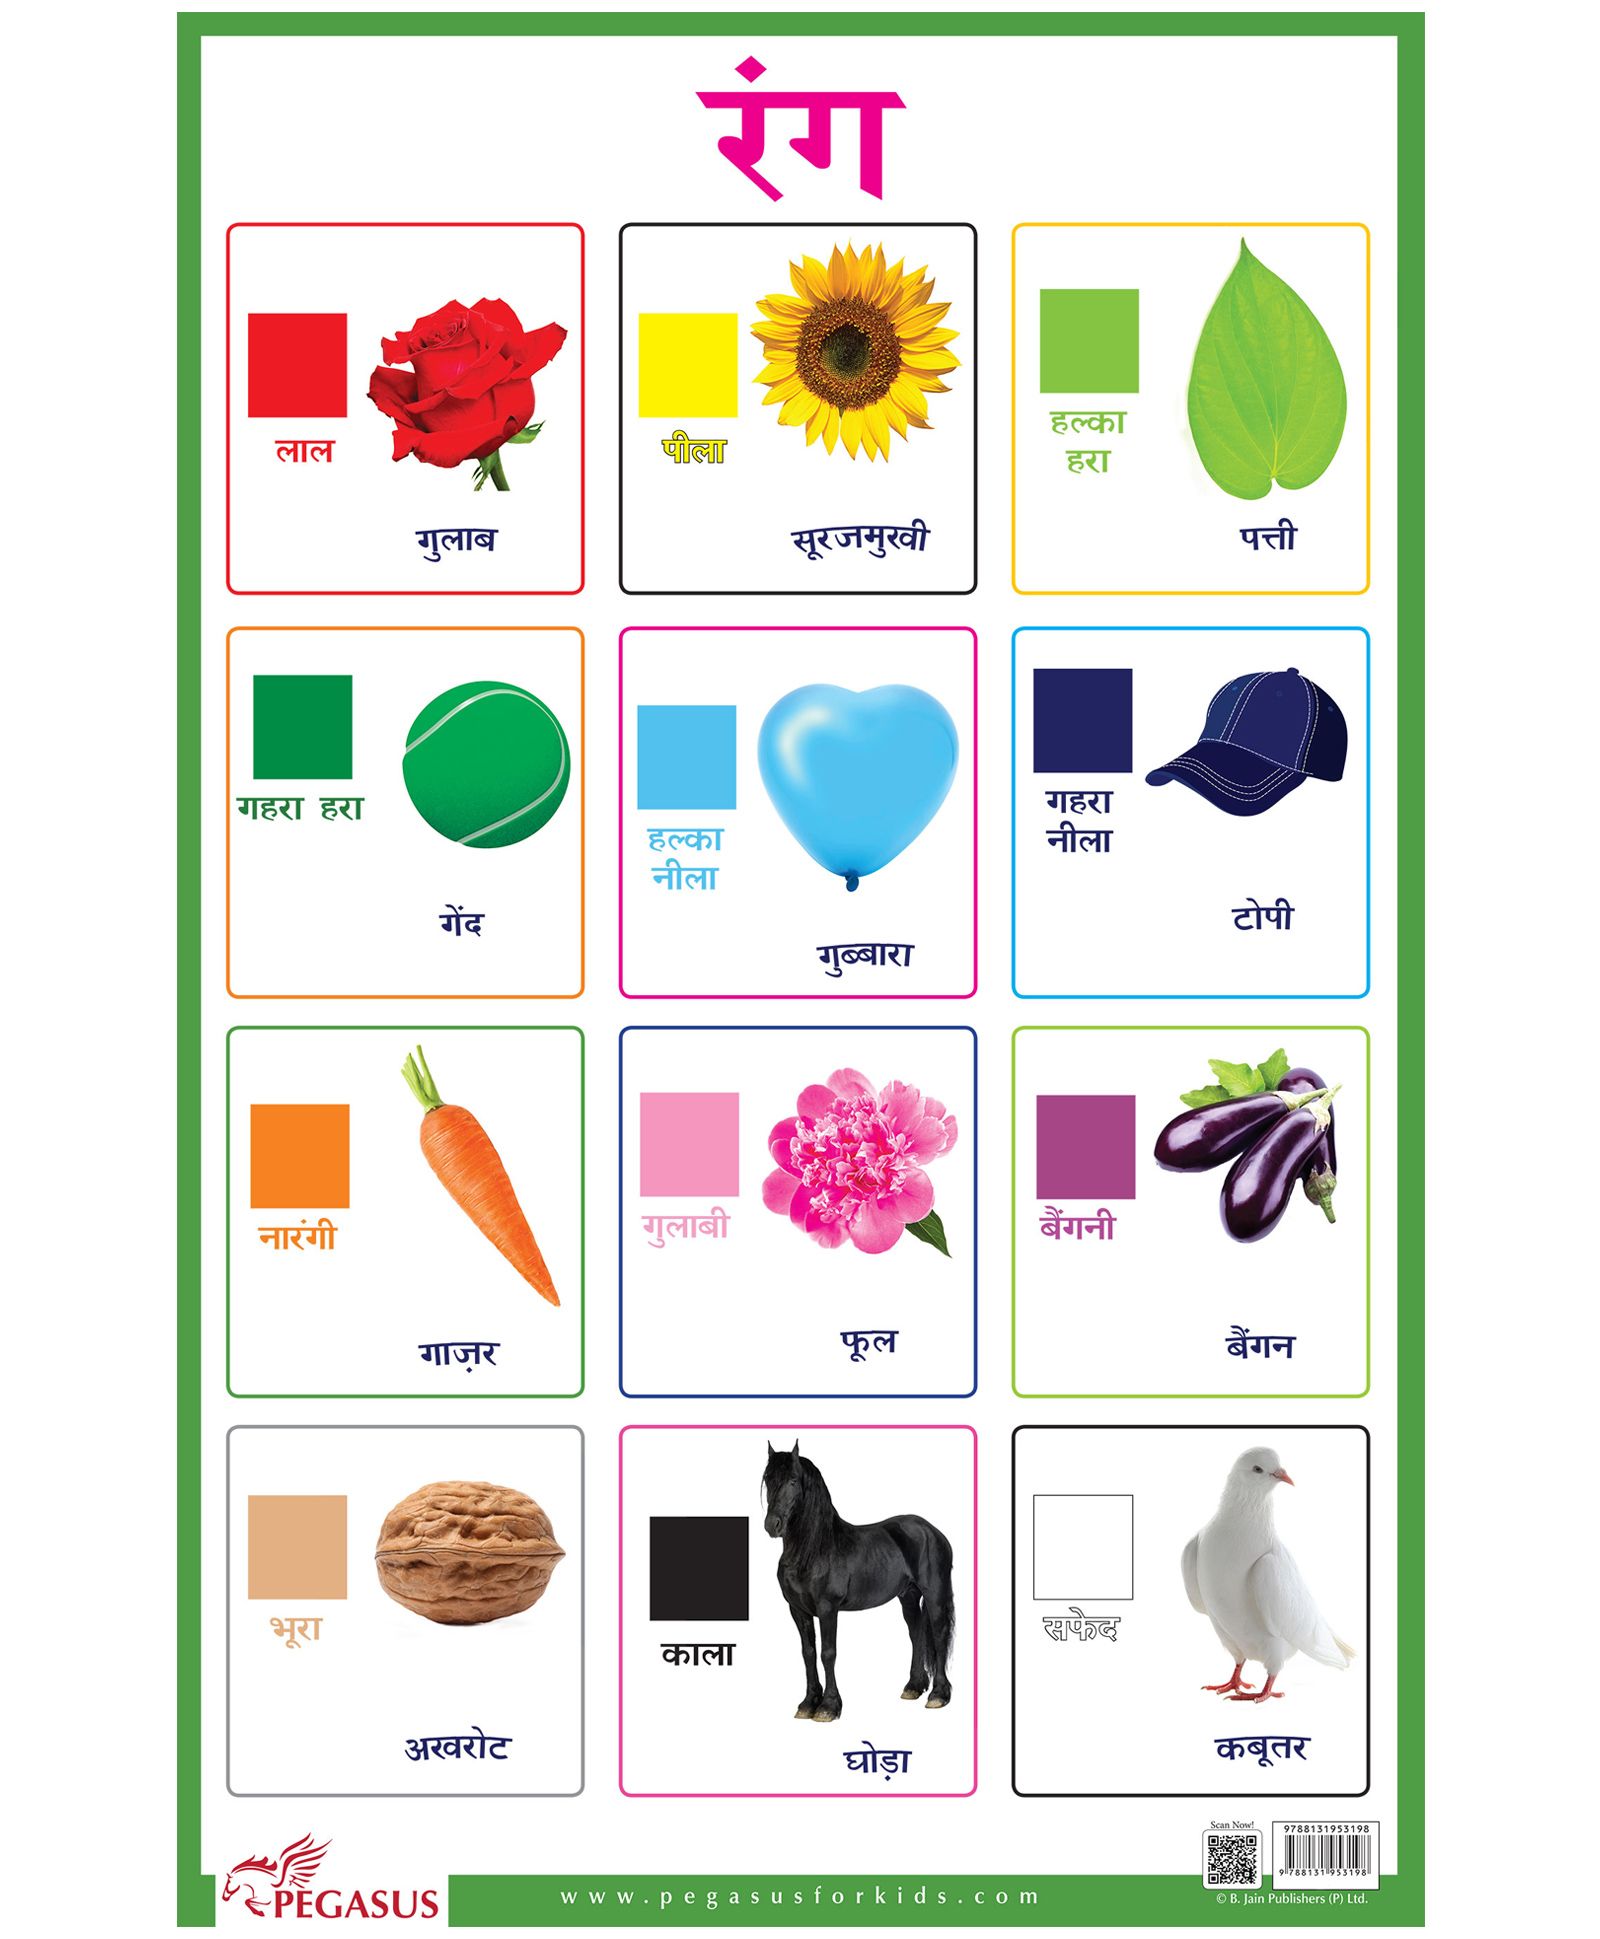 Inhaler Colors Chart 2021 - Types of Asthma Inhalers Cheatsheet ...